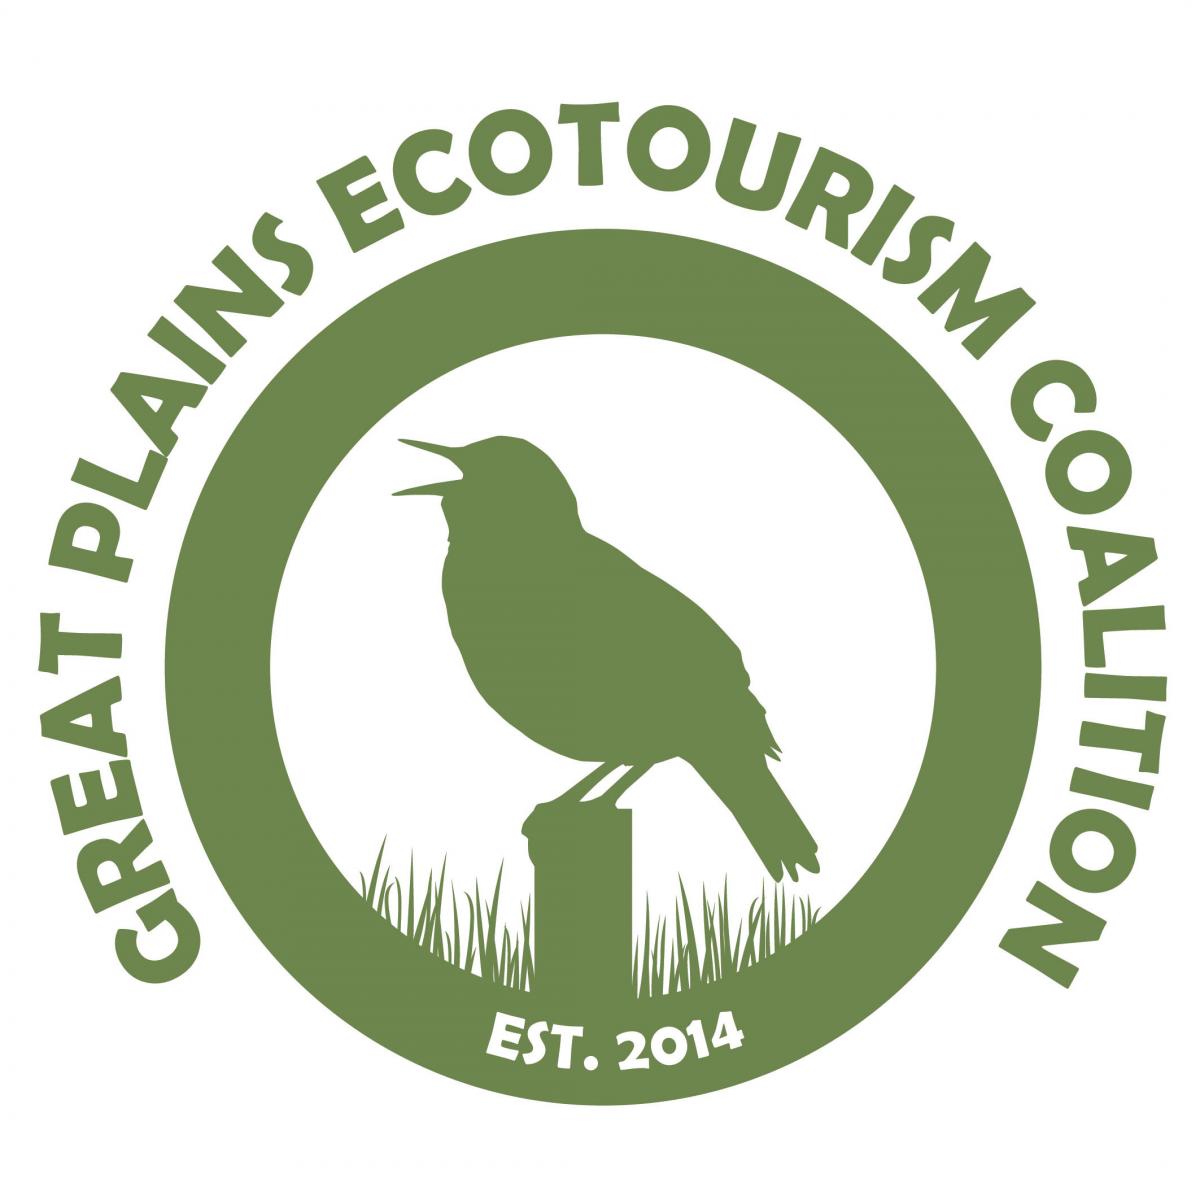 Ecotourism Coalition seal